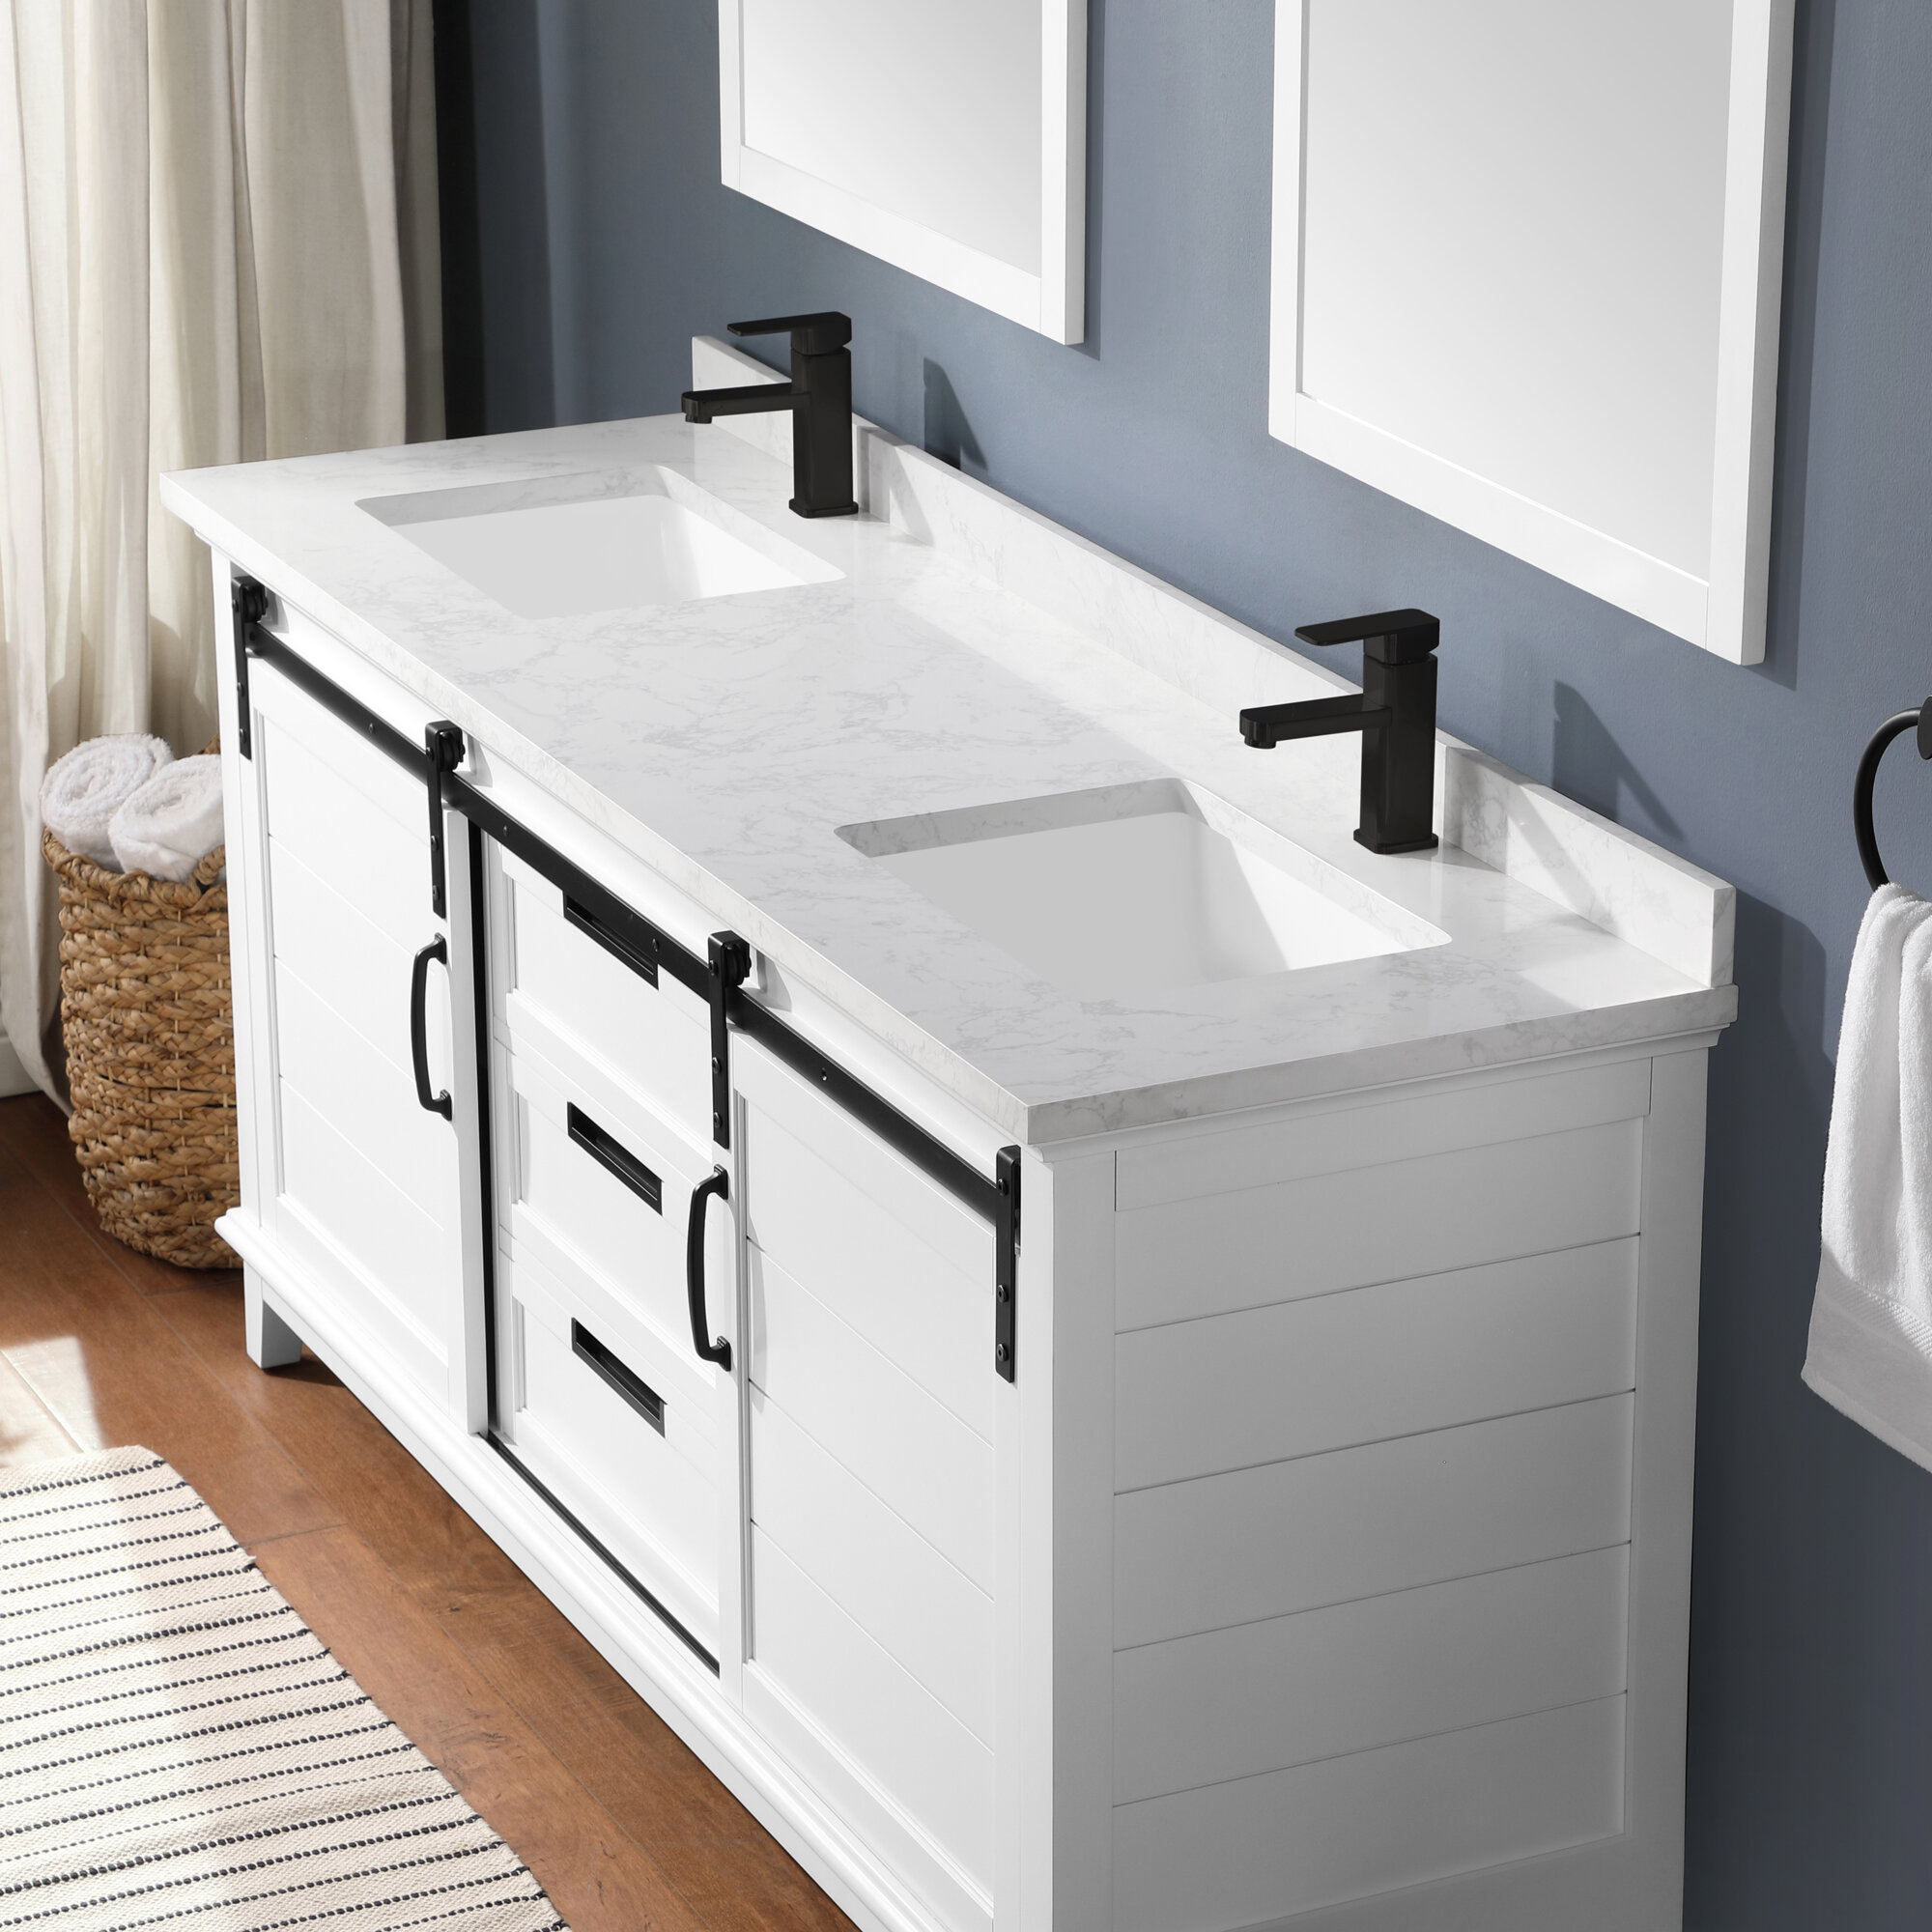 Ove Decors Edenderry 7205 Double Bathroom Vanity Set Reviews Wayfair